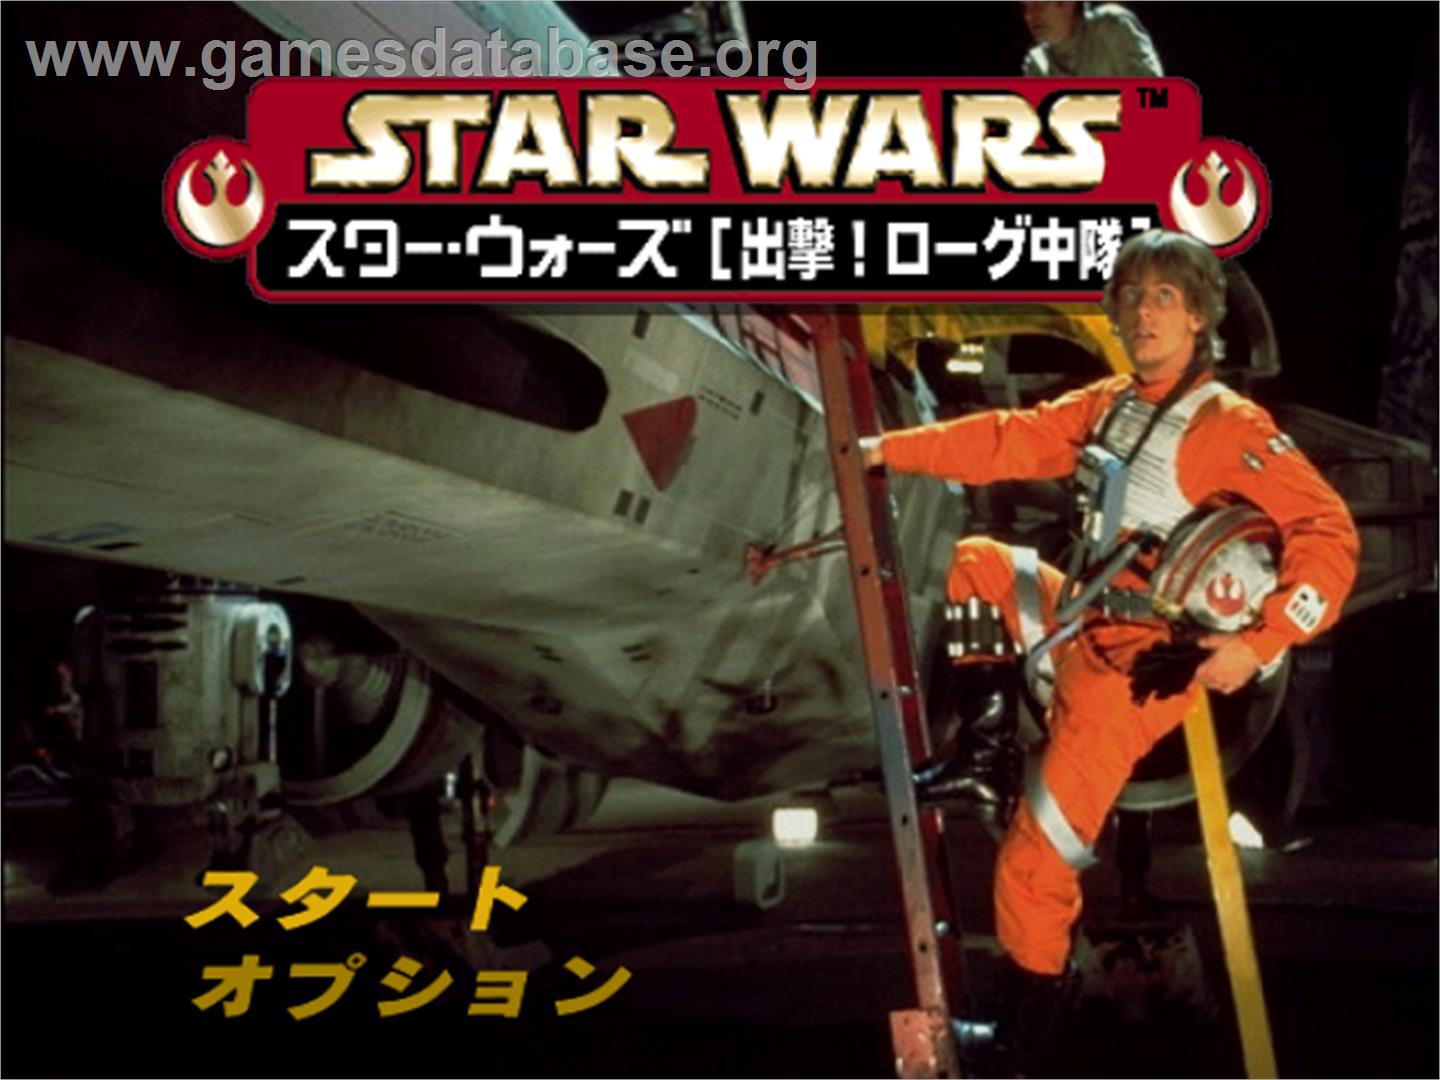 Star Wars: Shutsugeki! Rogue Chuutai - Nintendo N64 - Artwork - Title Screen